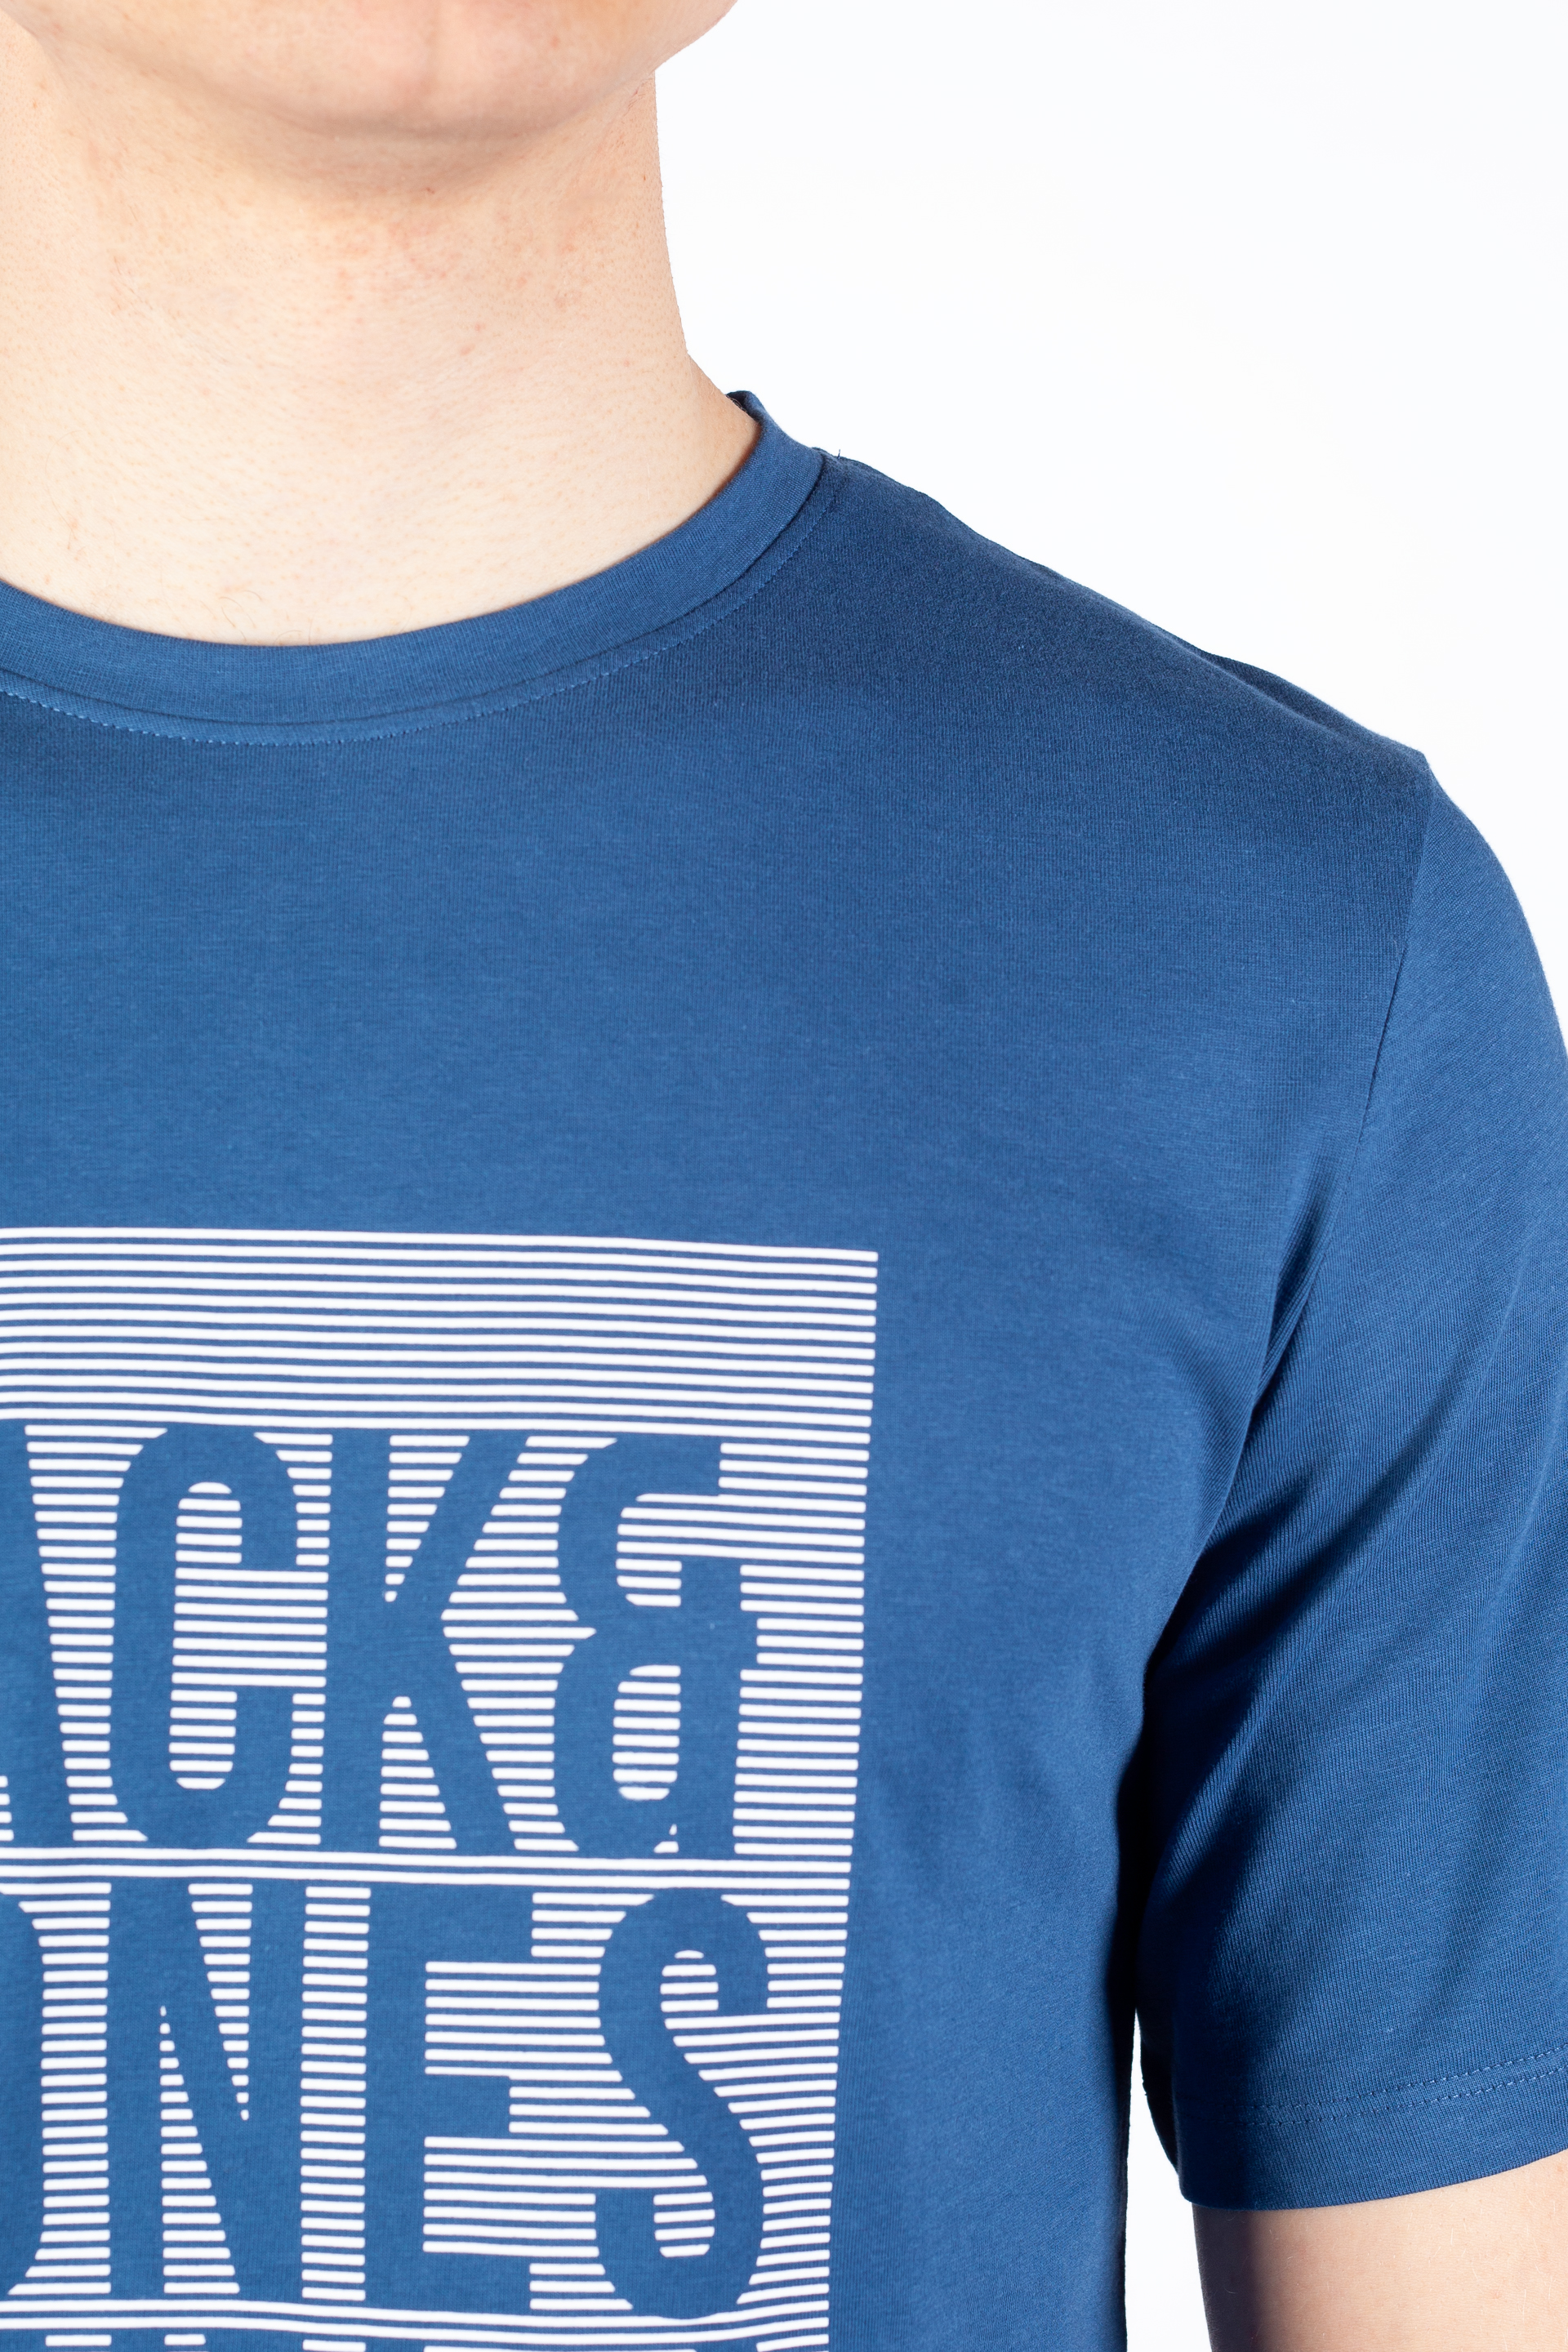 T-krekls JACK & JONES 12248614-Ensign-Blue